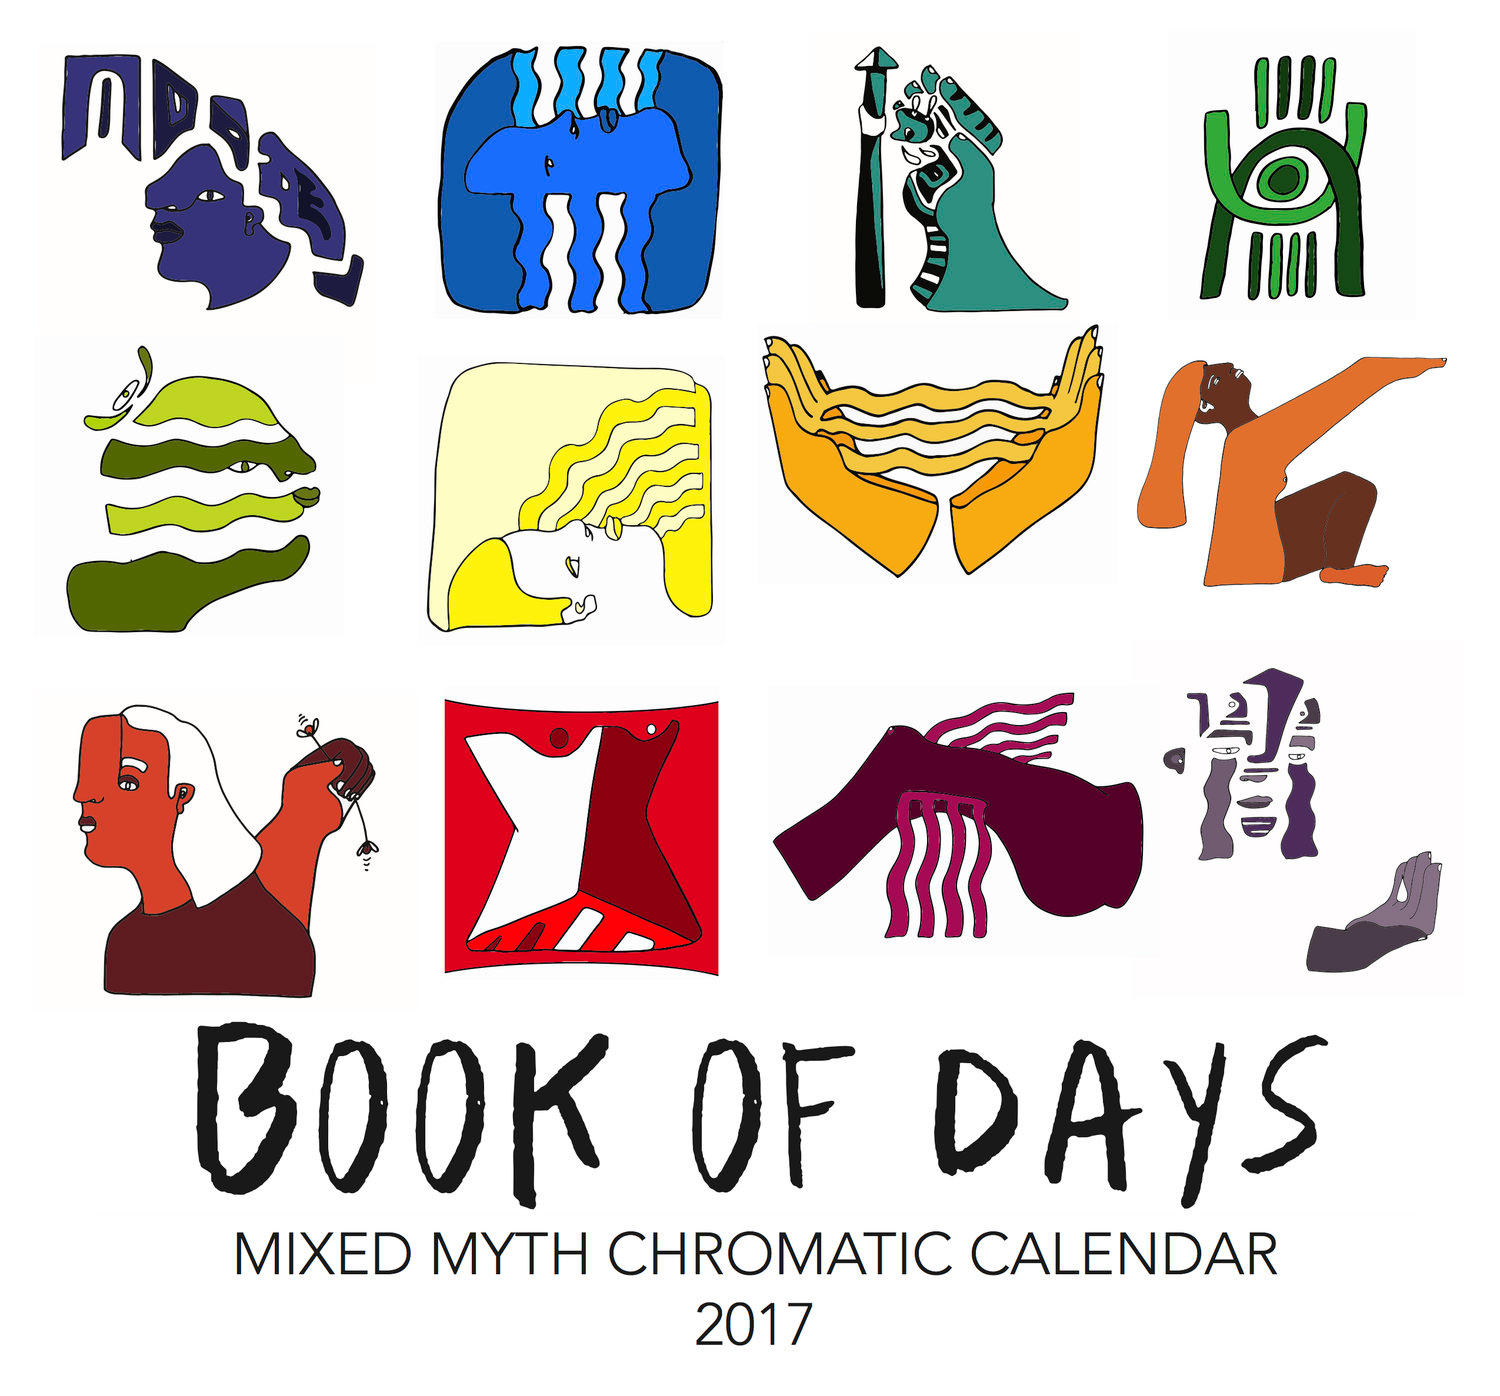 BOOK OF DAYS, a 2017 calendar by Buckley